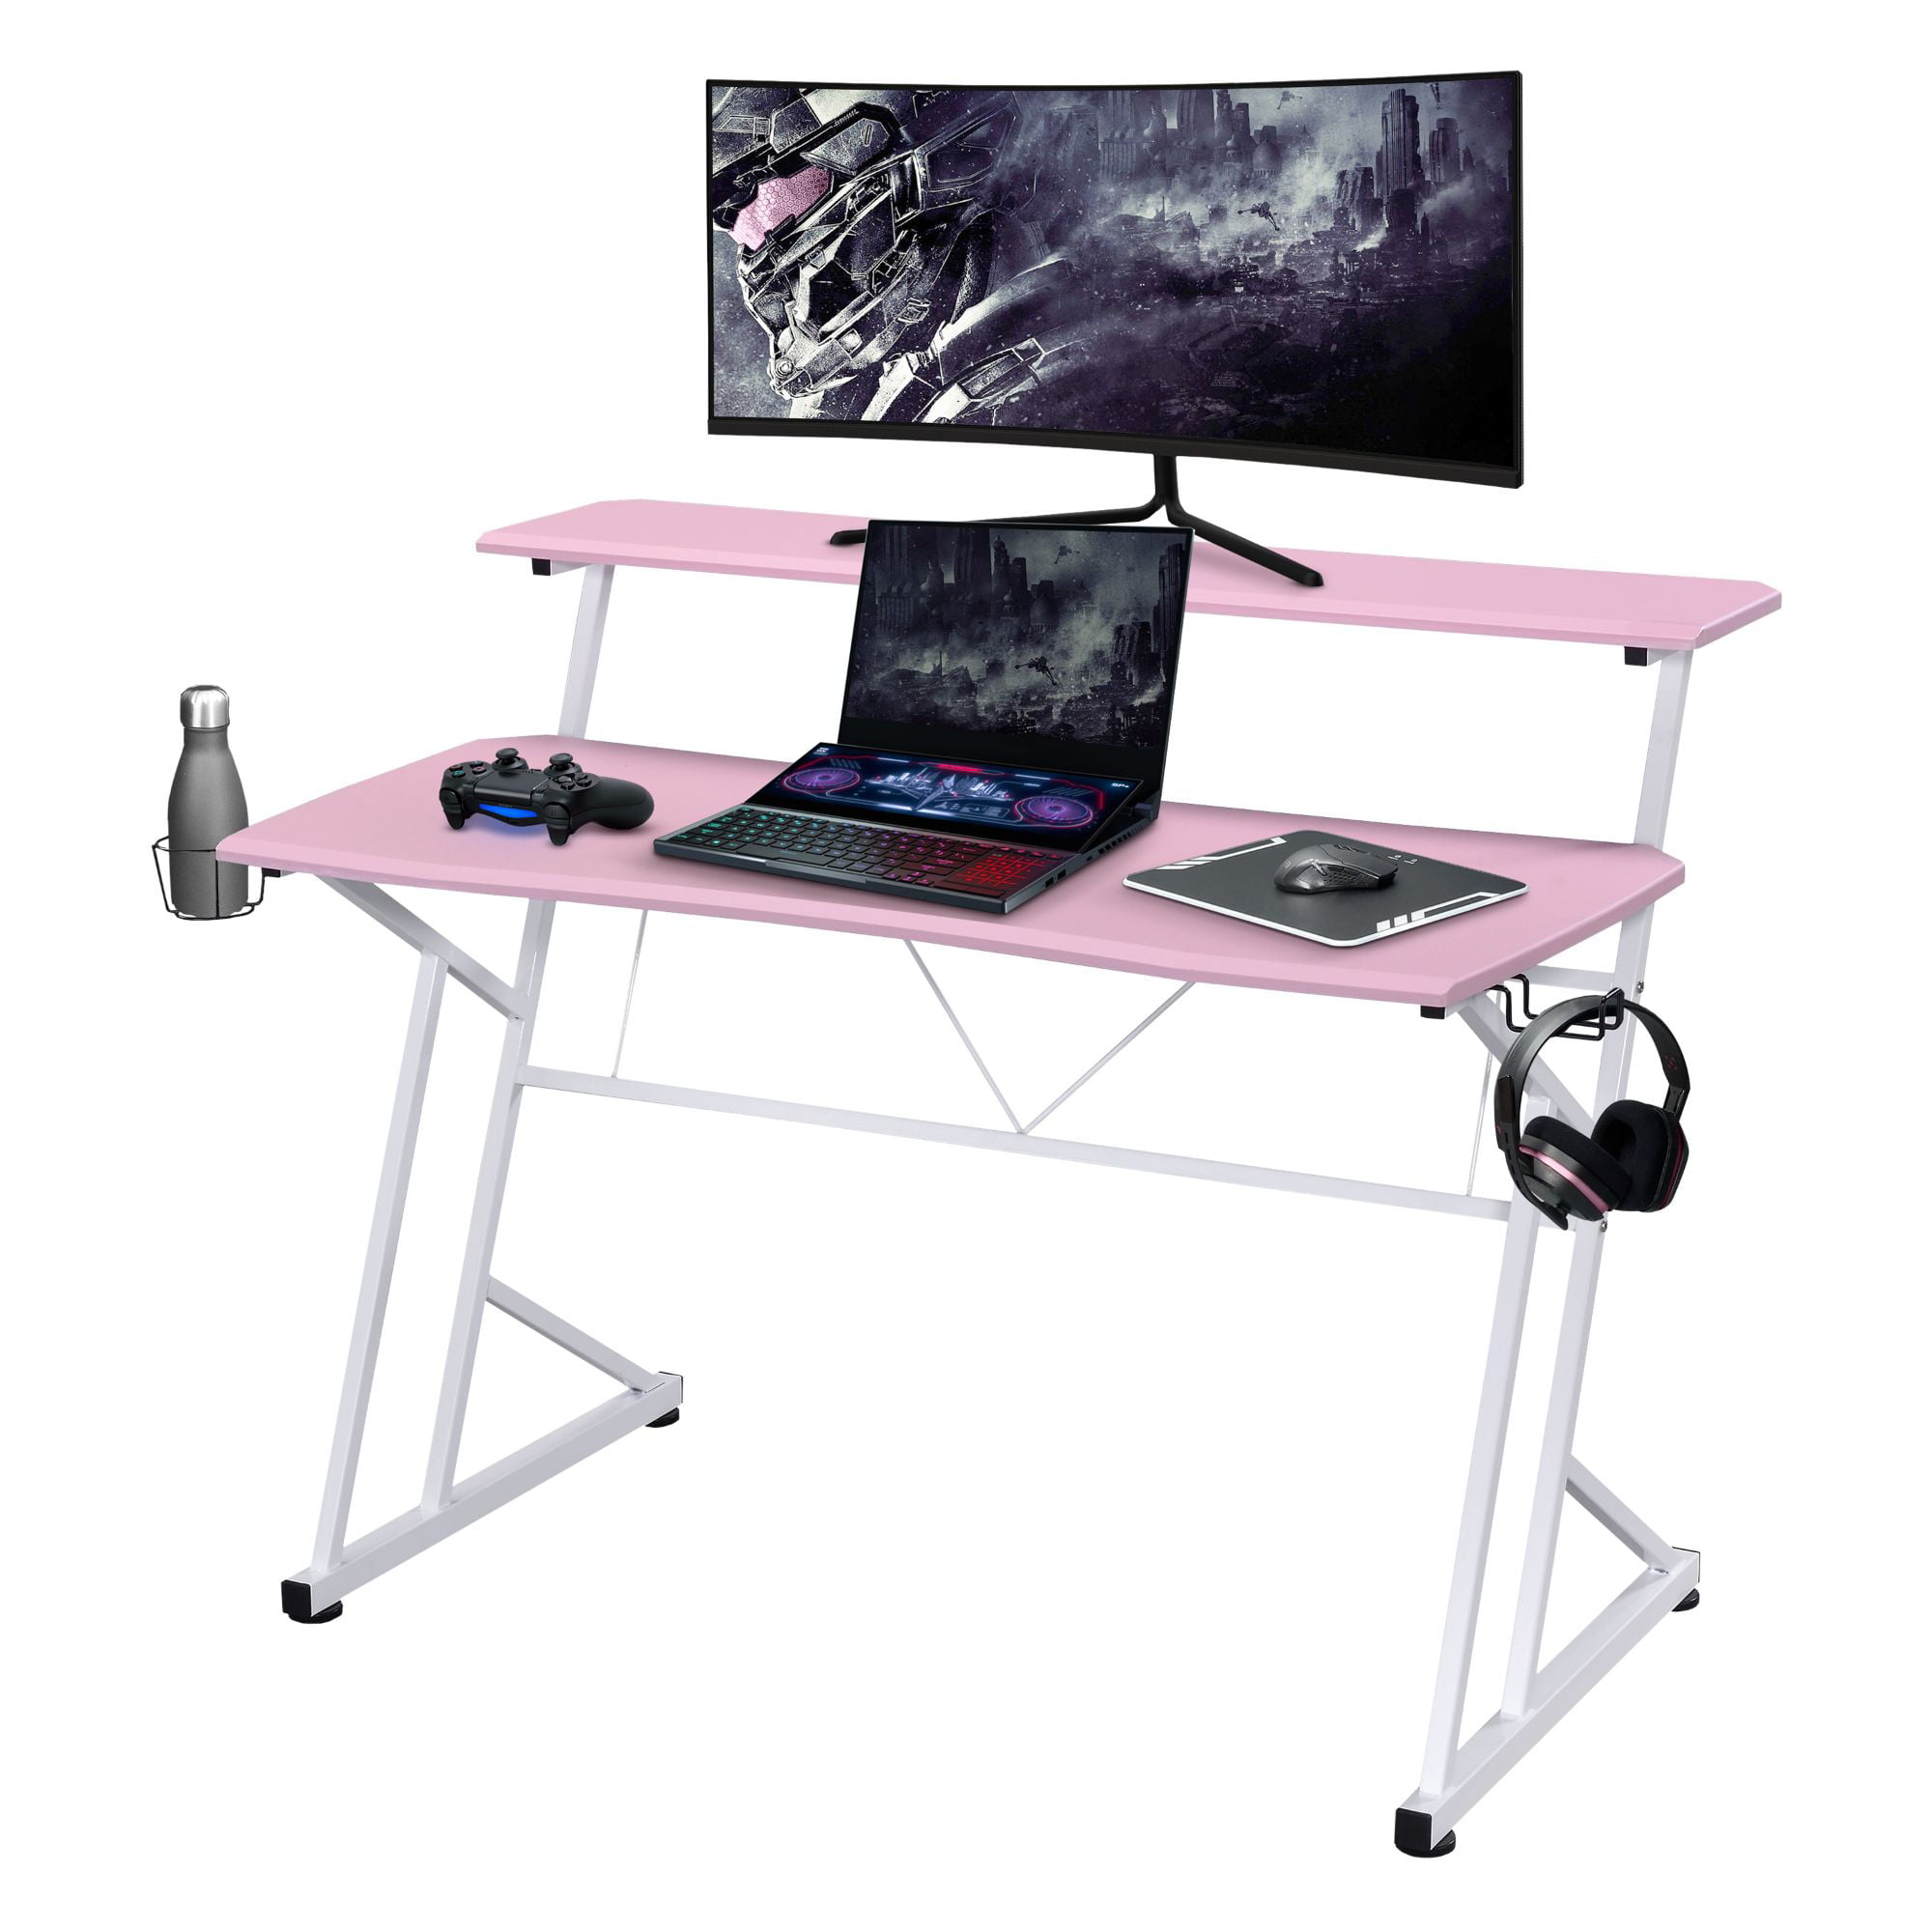 TECHNI MOBILI 23.62 in. Rectangular Pink Kids Computer Gaming Desk